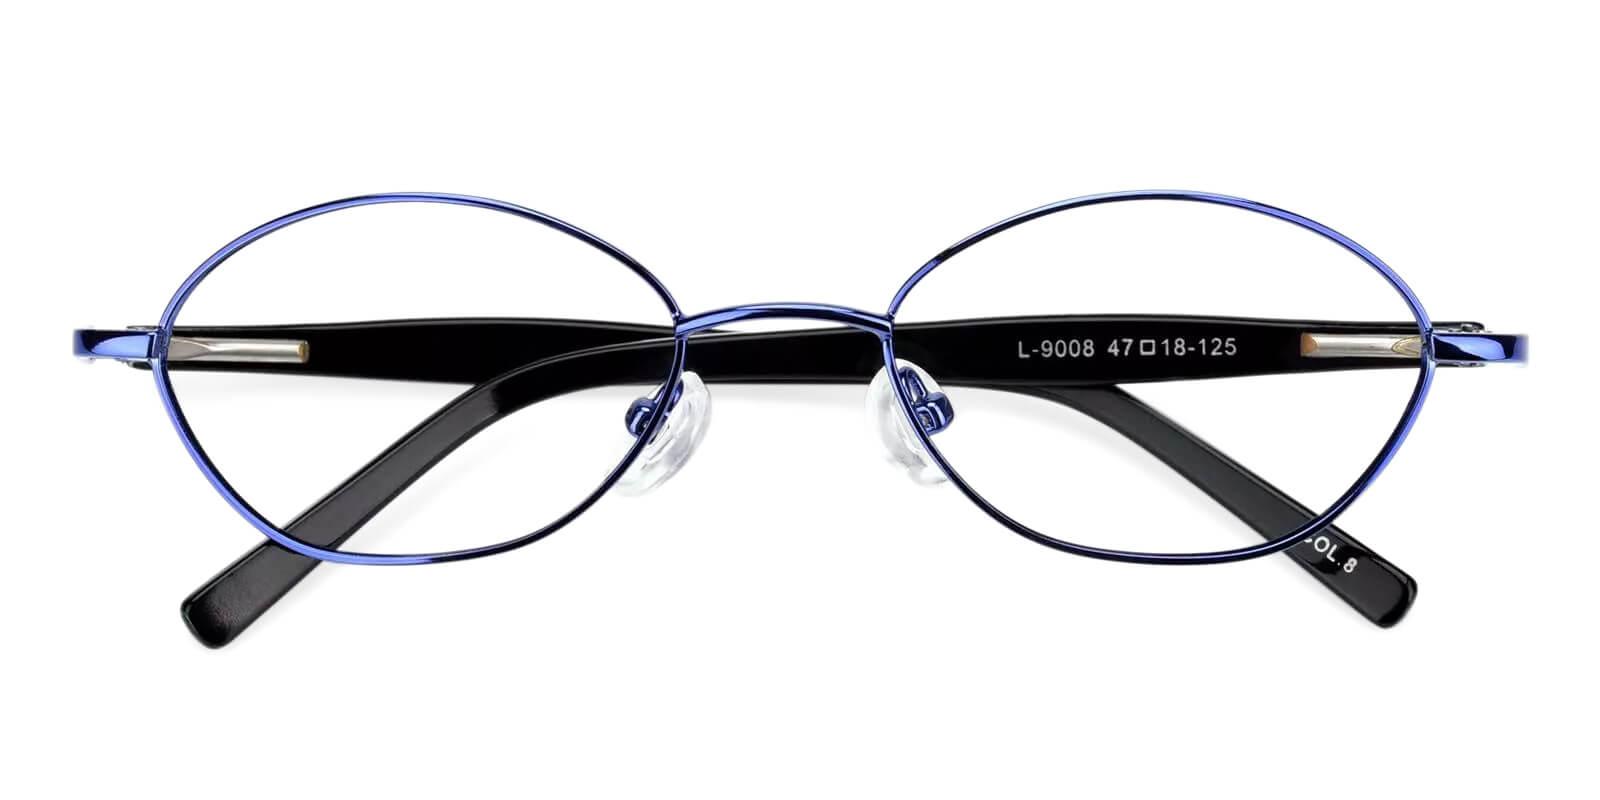 Kids-Priscilla Blue Metal Eyeglasses , Fashion , NosePads , SpringHinges Frames from ABBE Glasses